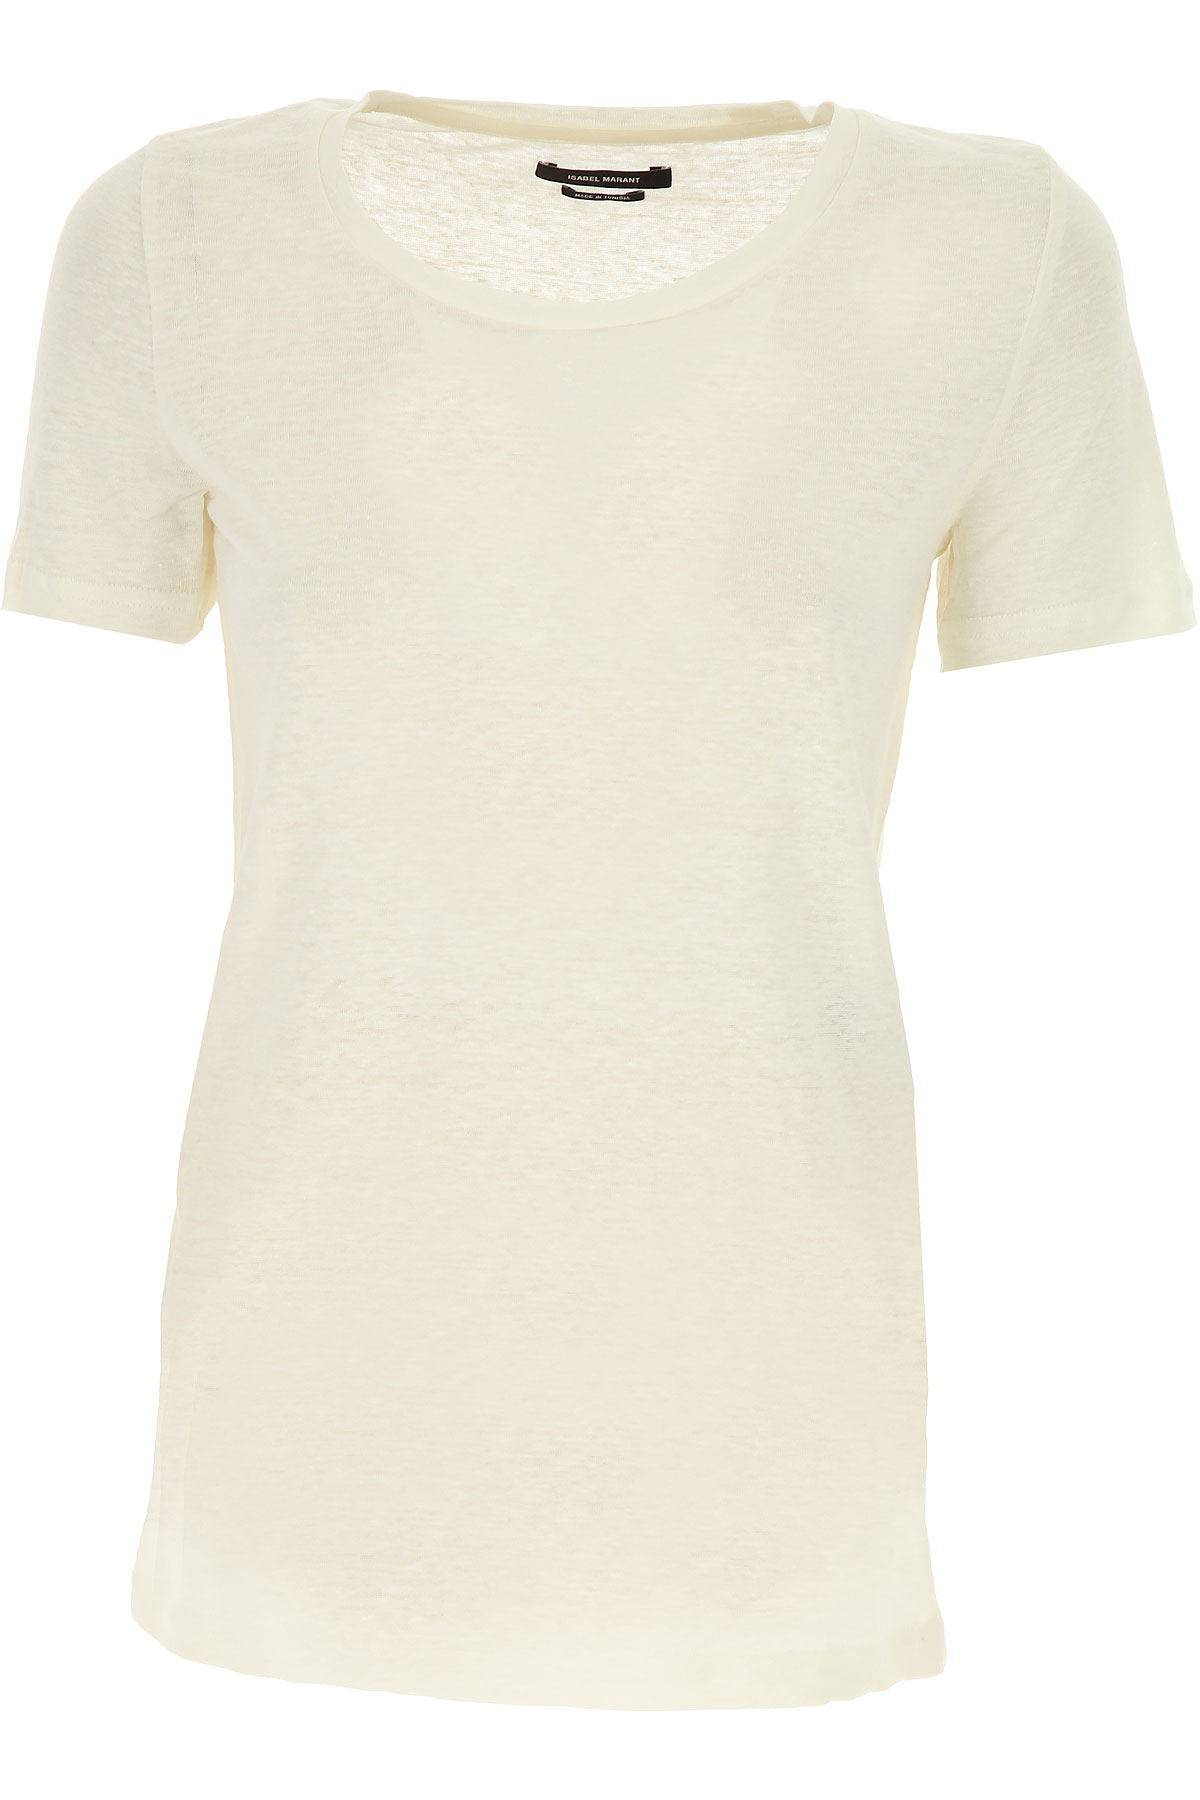 Isabel Marant T-shirt Femme, Blanc, Lin, 2017, 40 42